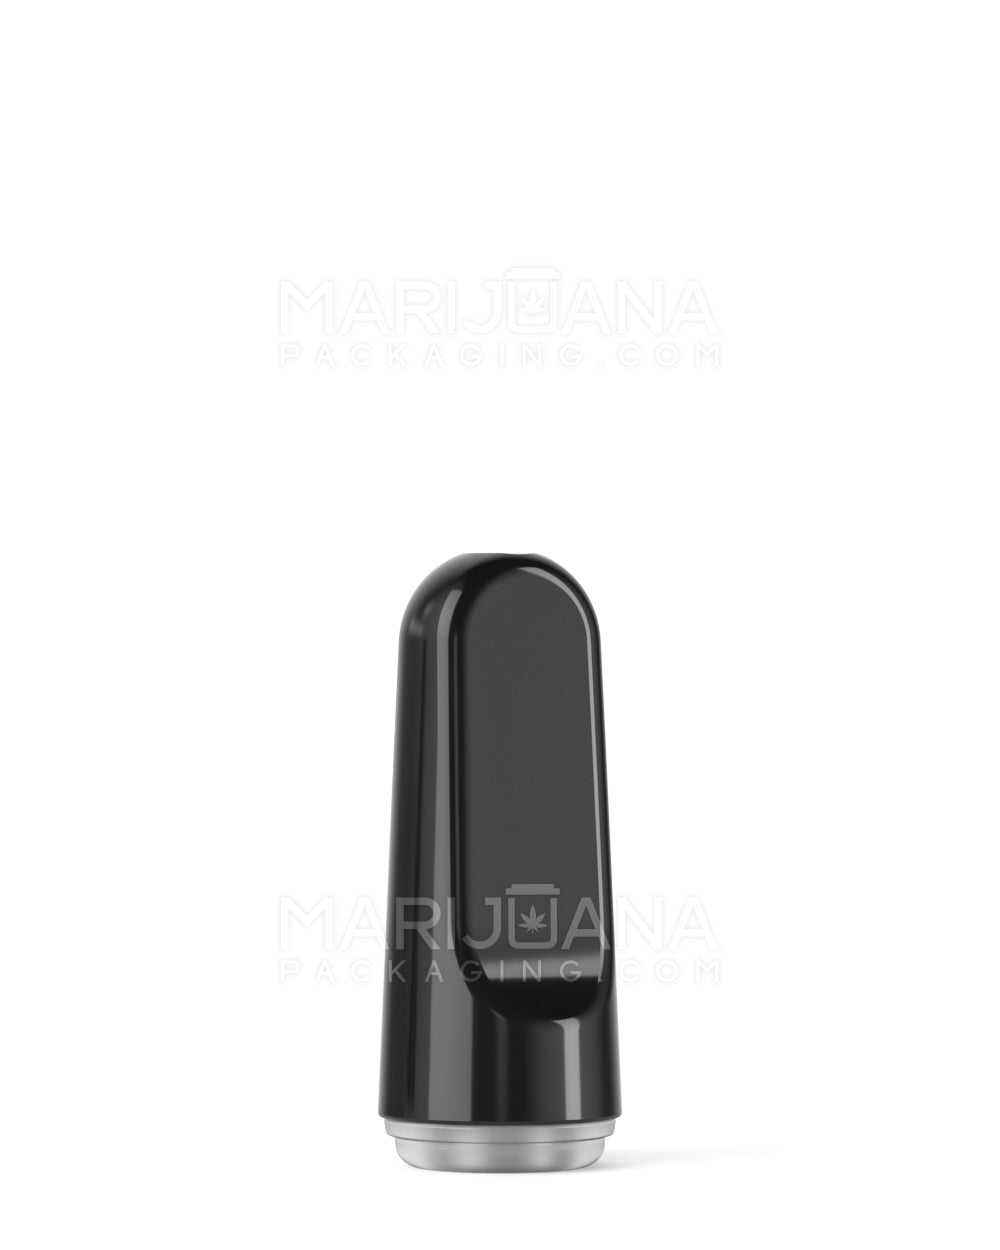 uKera ceramic screw-on vape mouthpiece